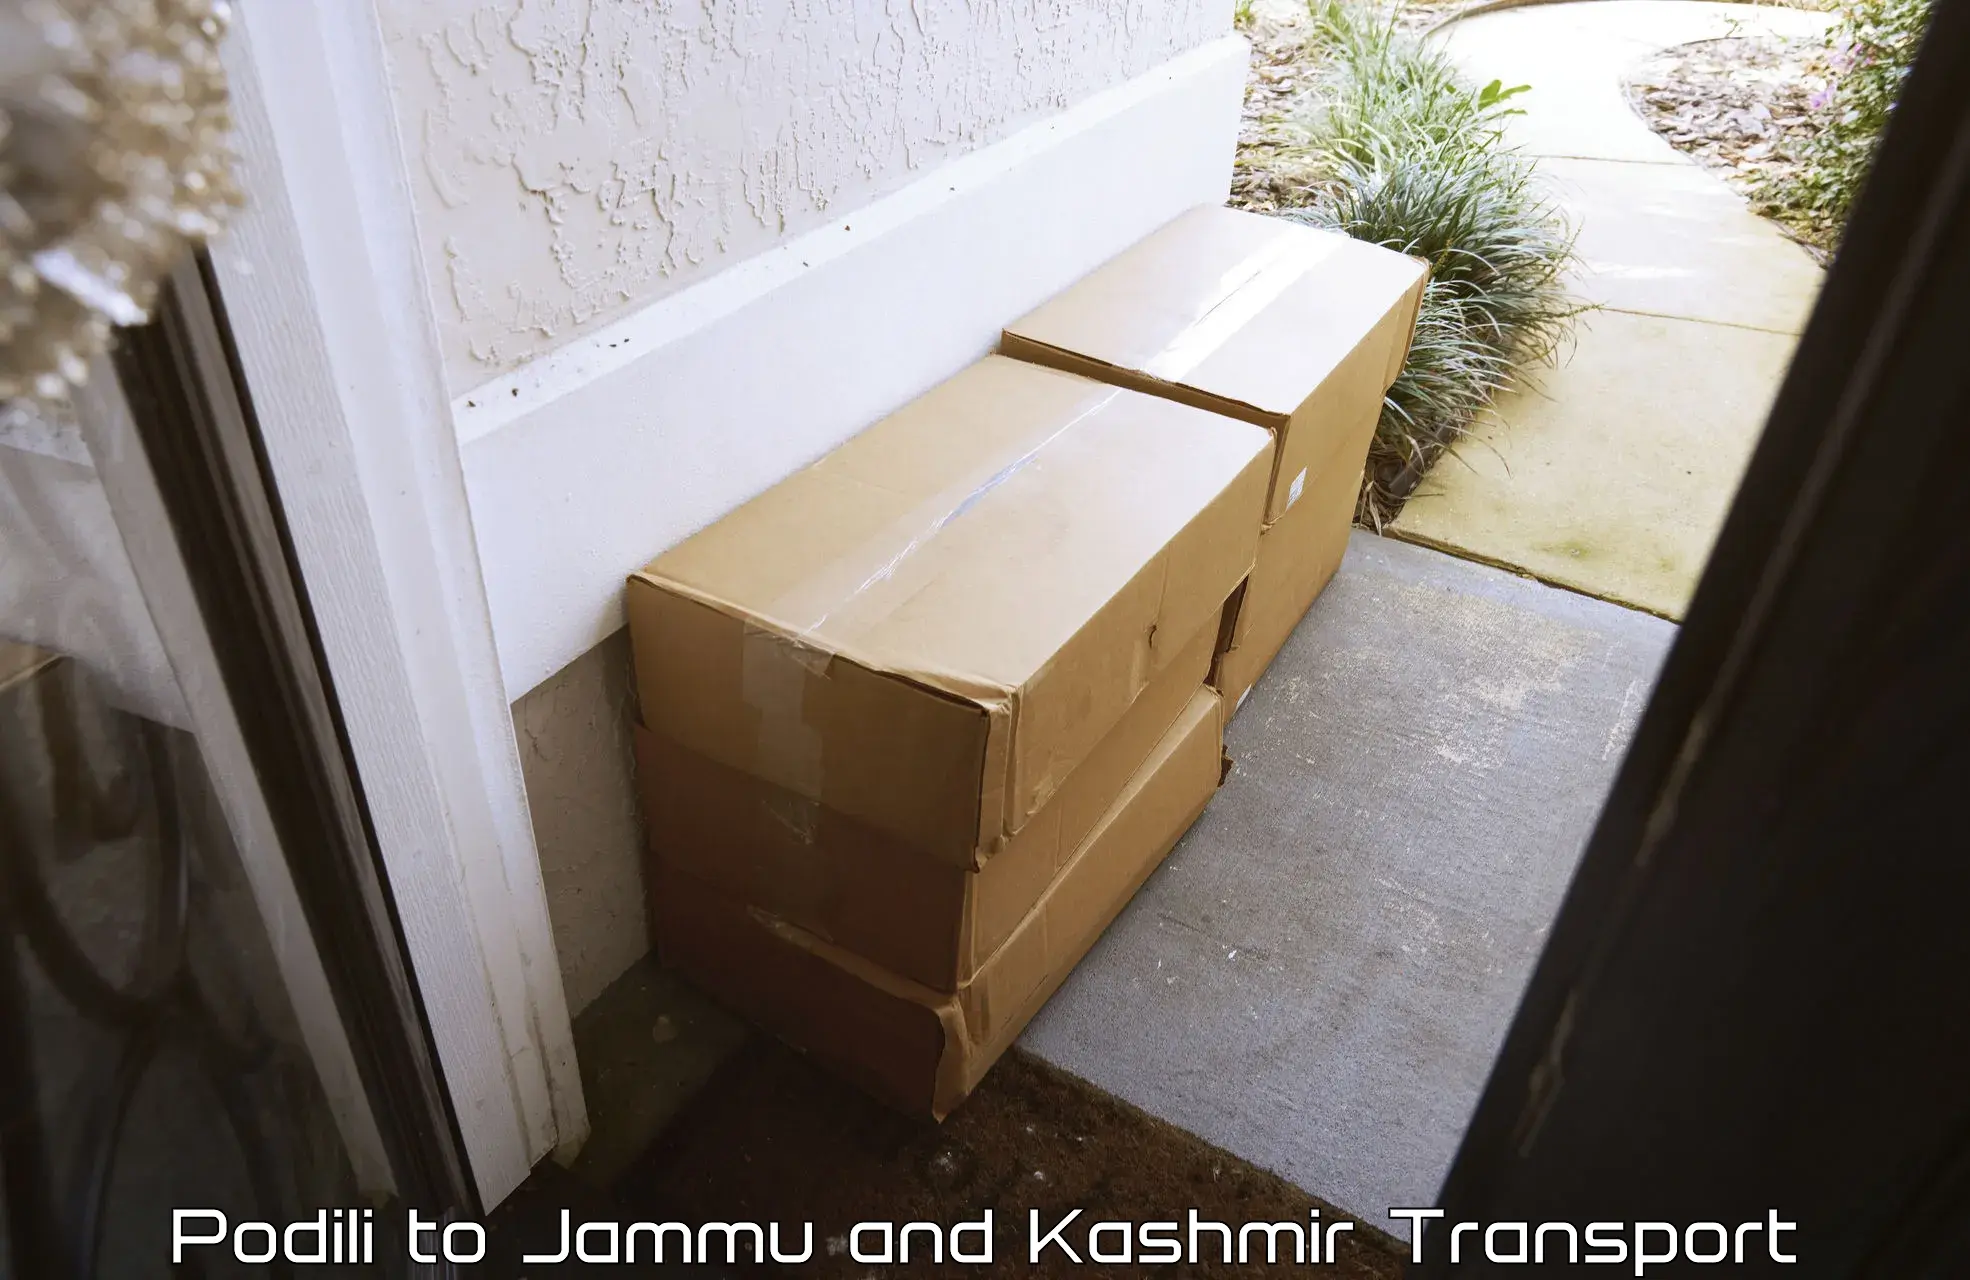 Two wheeler parcel service Podili to Kargil